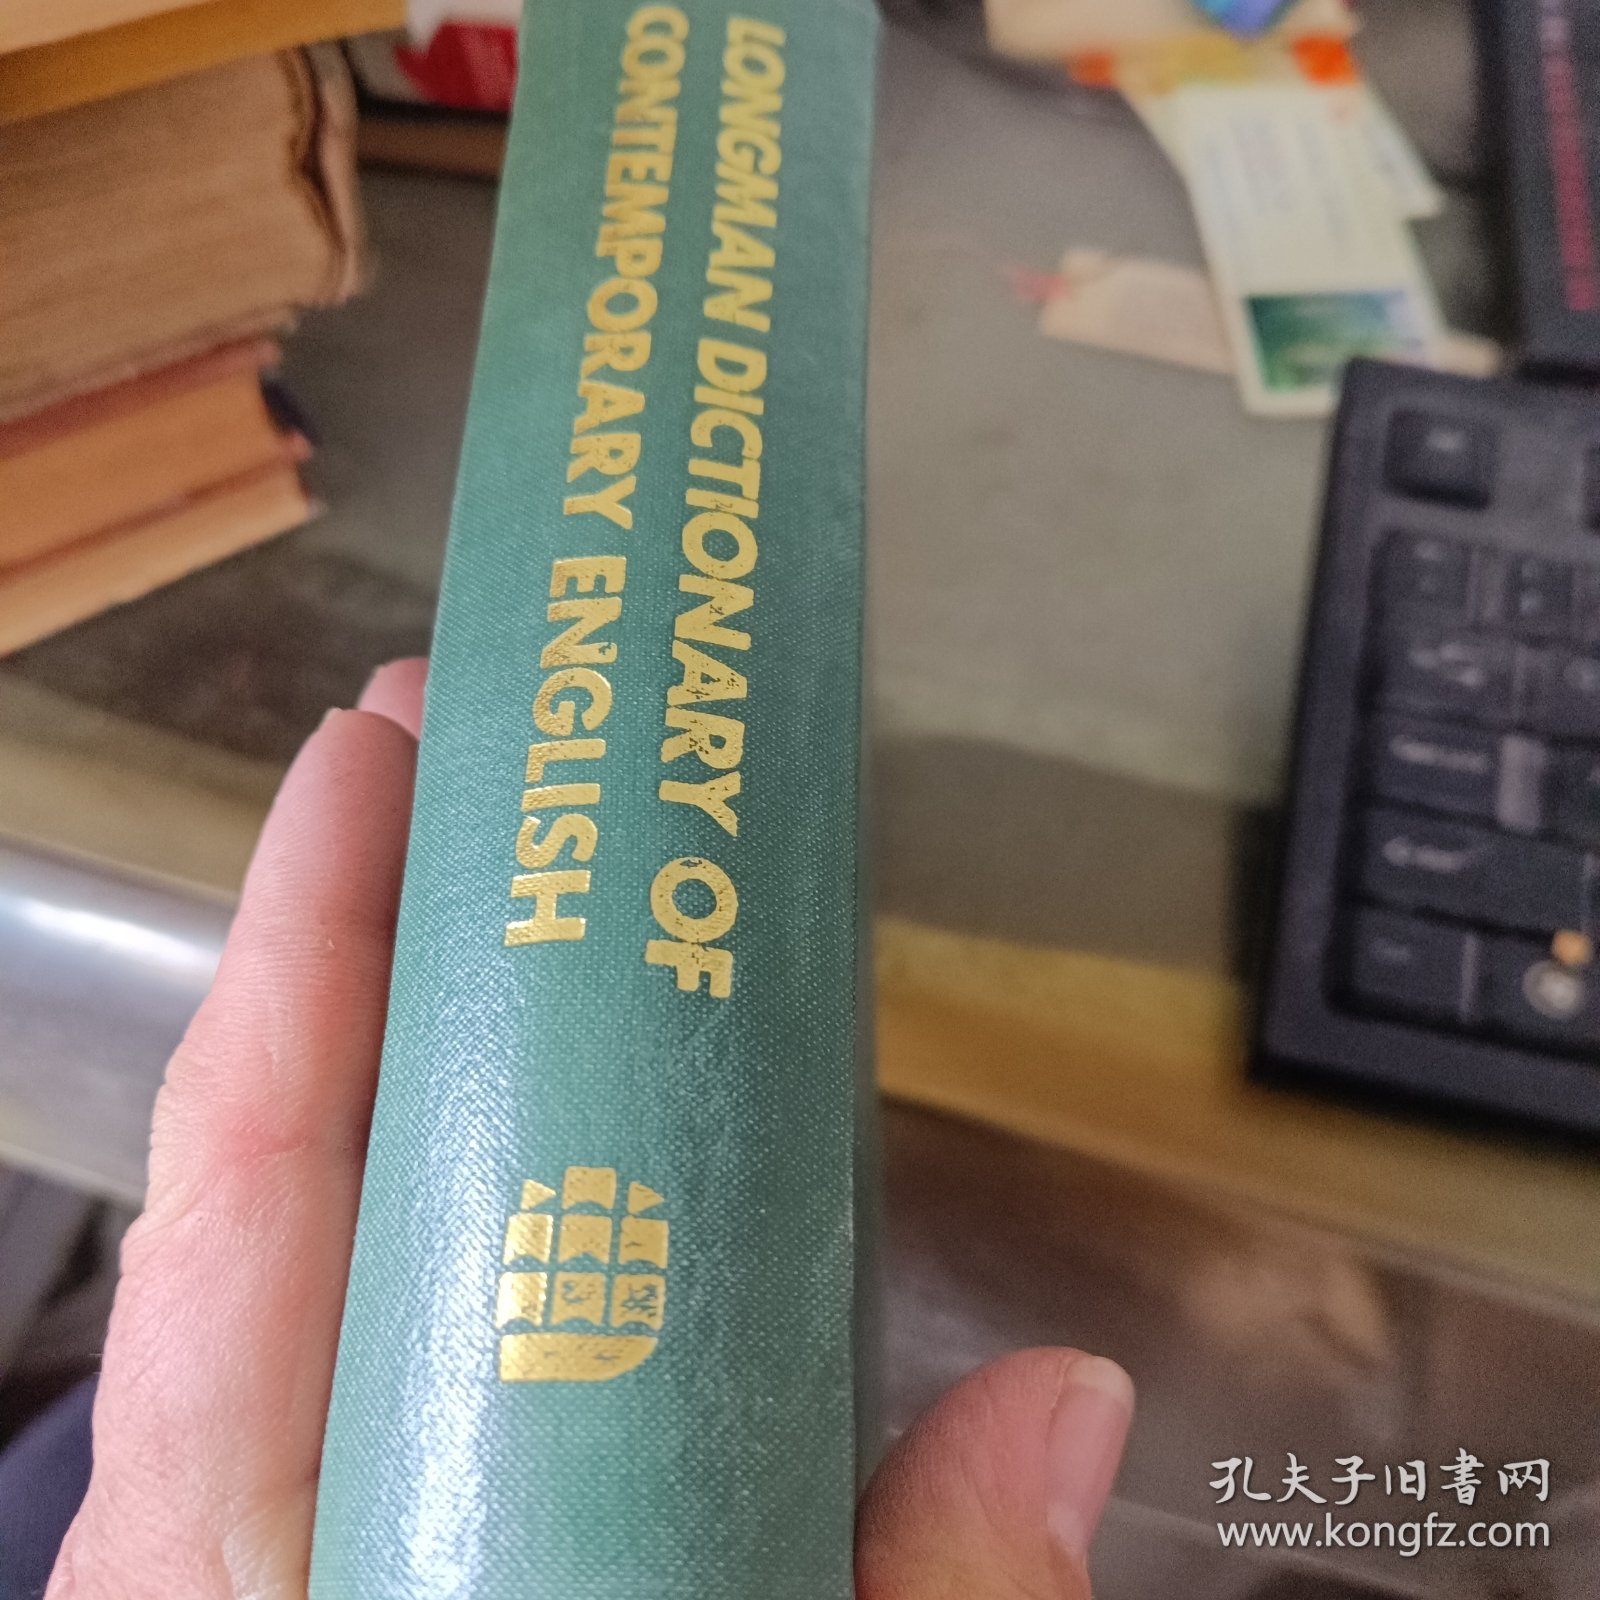 longman dictionary of contemporary english 朗曼当代英语词典 英文版